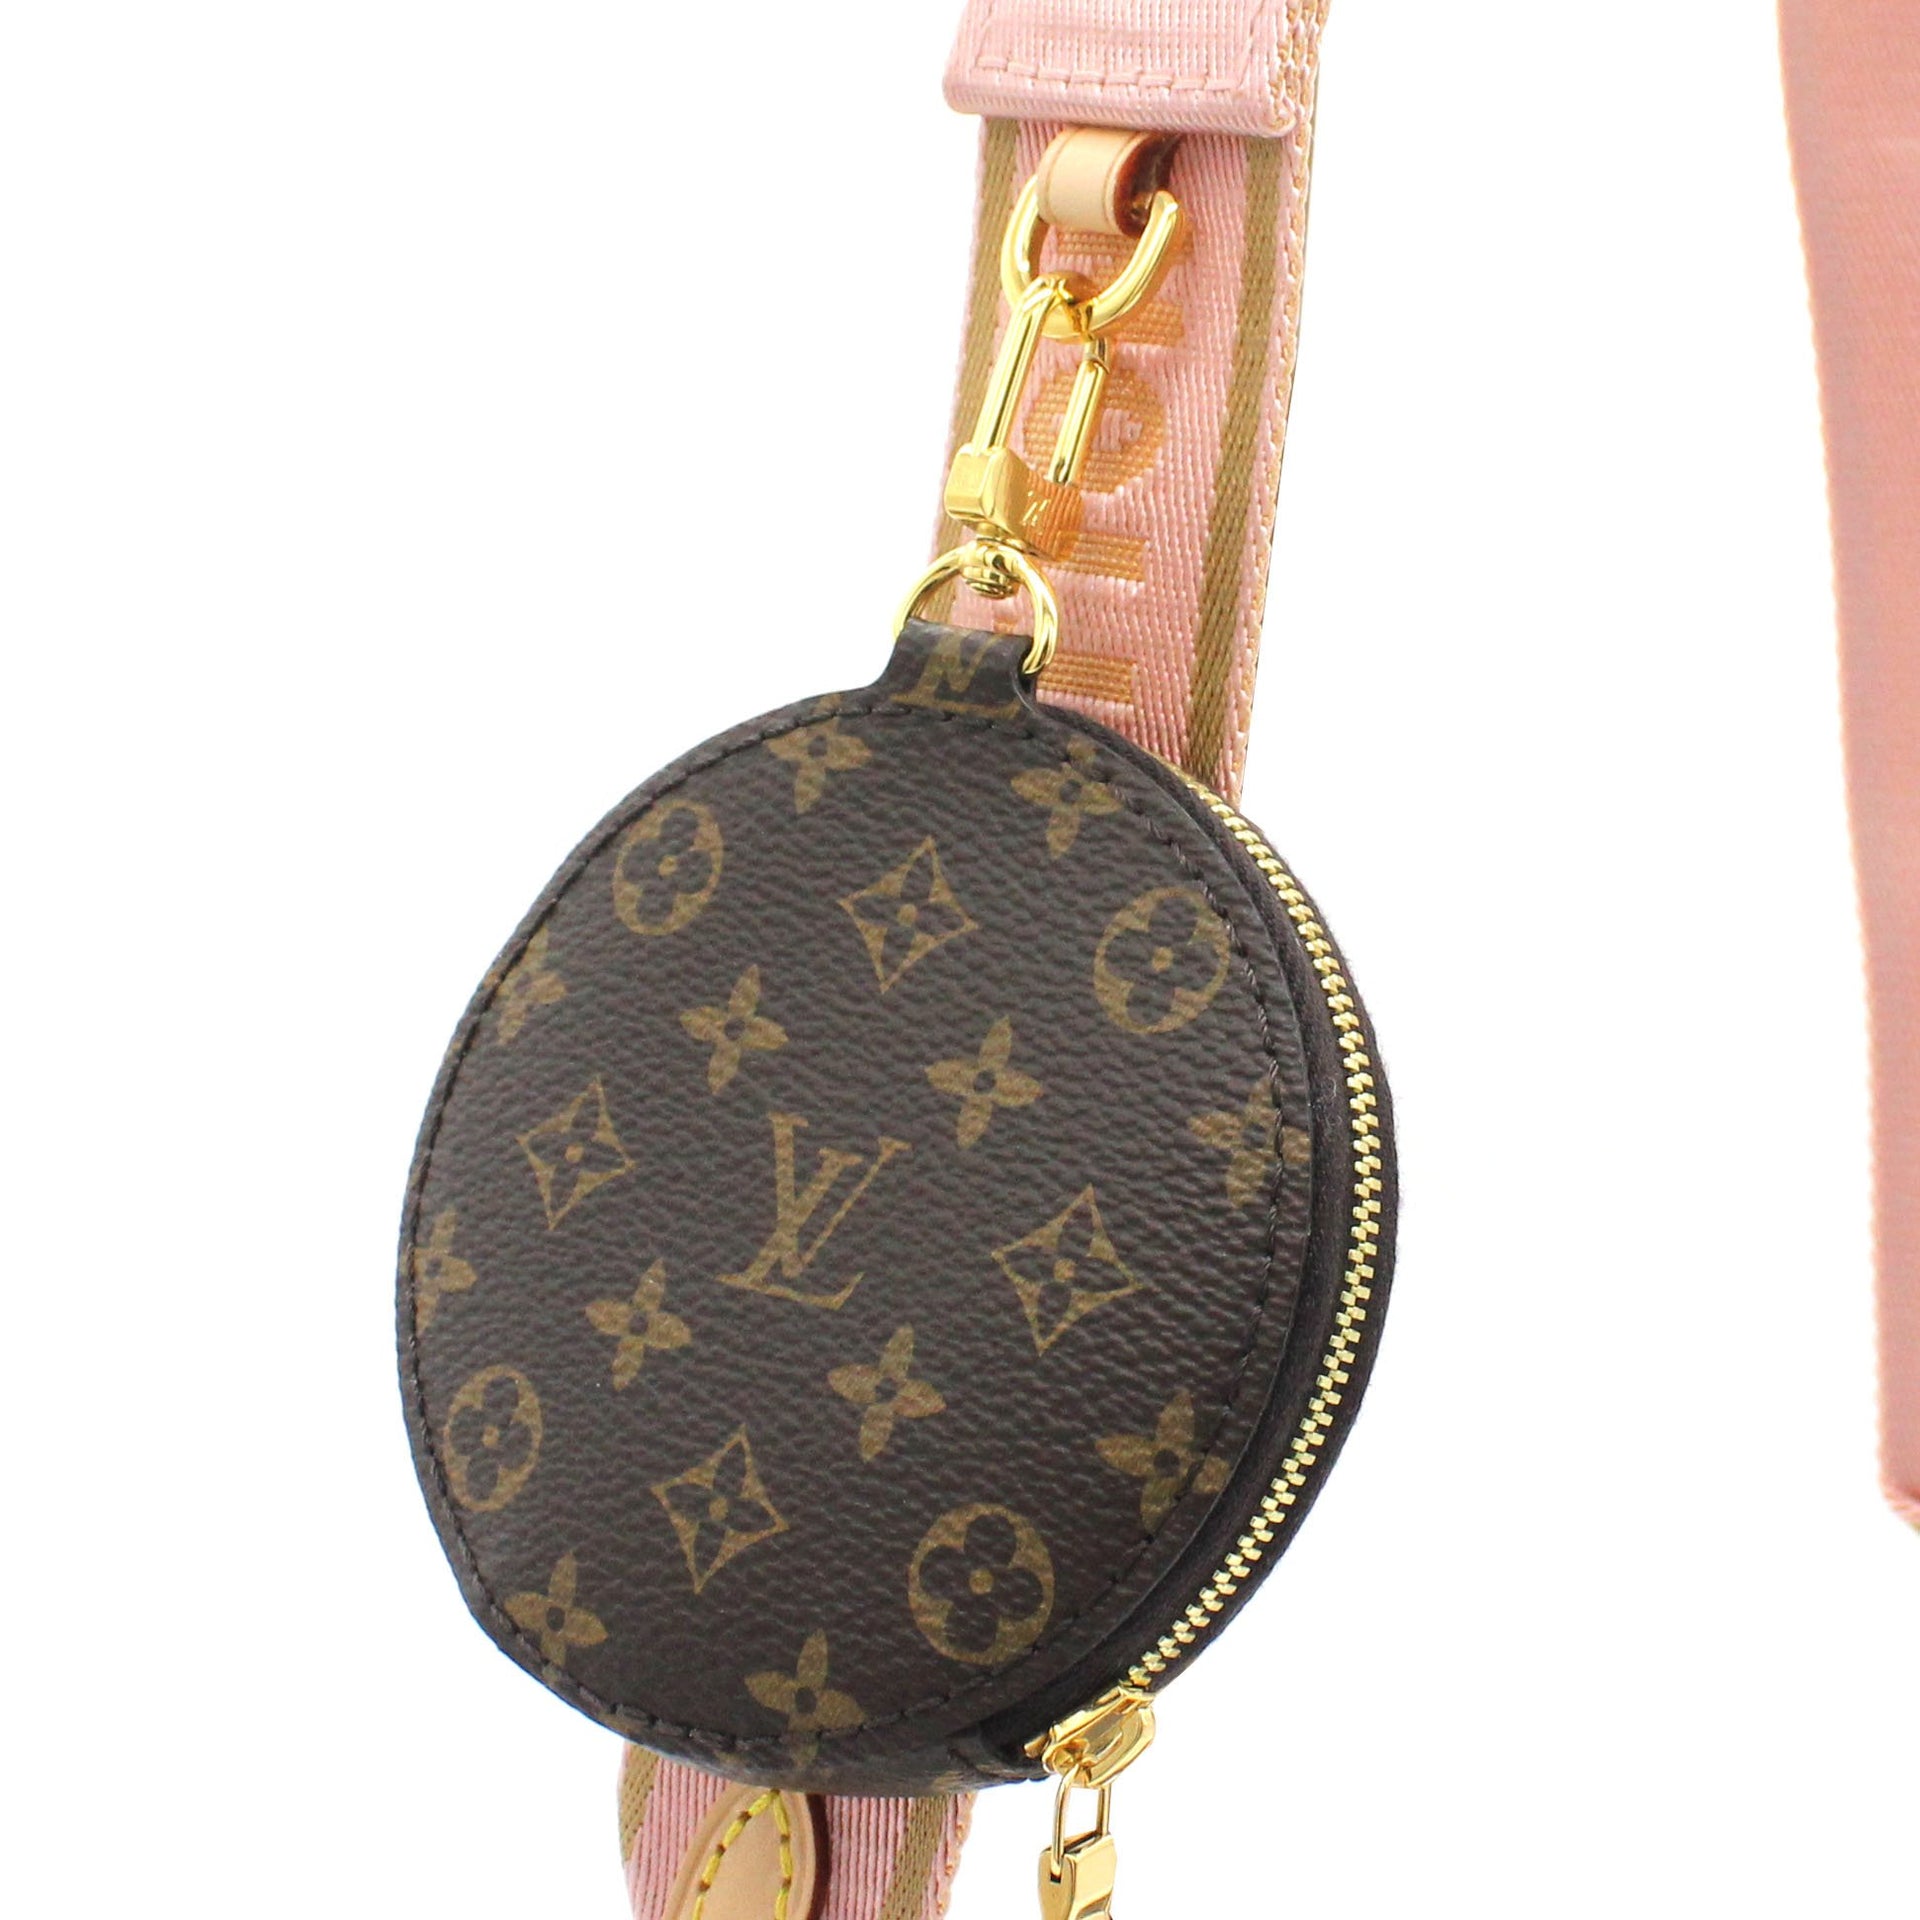 Louis Vuitton Rose Clair Multi-Pochette Accessories Bag